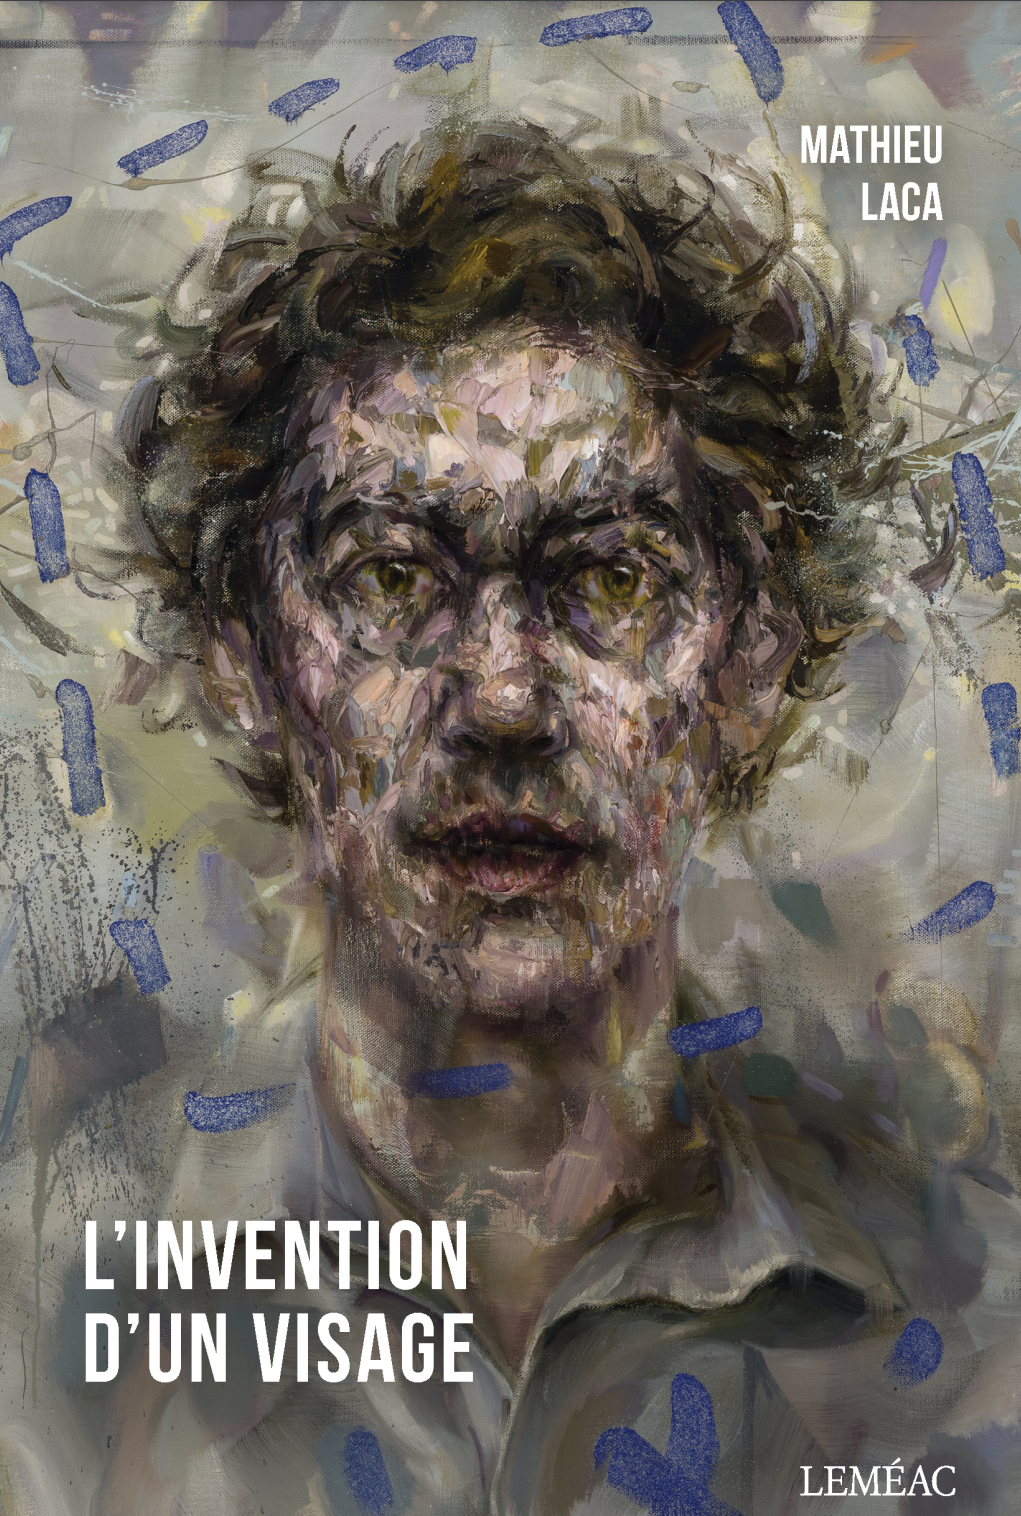 Cover of 'L'invention d'un visage' by Mathieu Laca, showcasing a detailed, expressionistic portrait of a man.